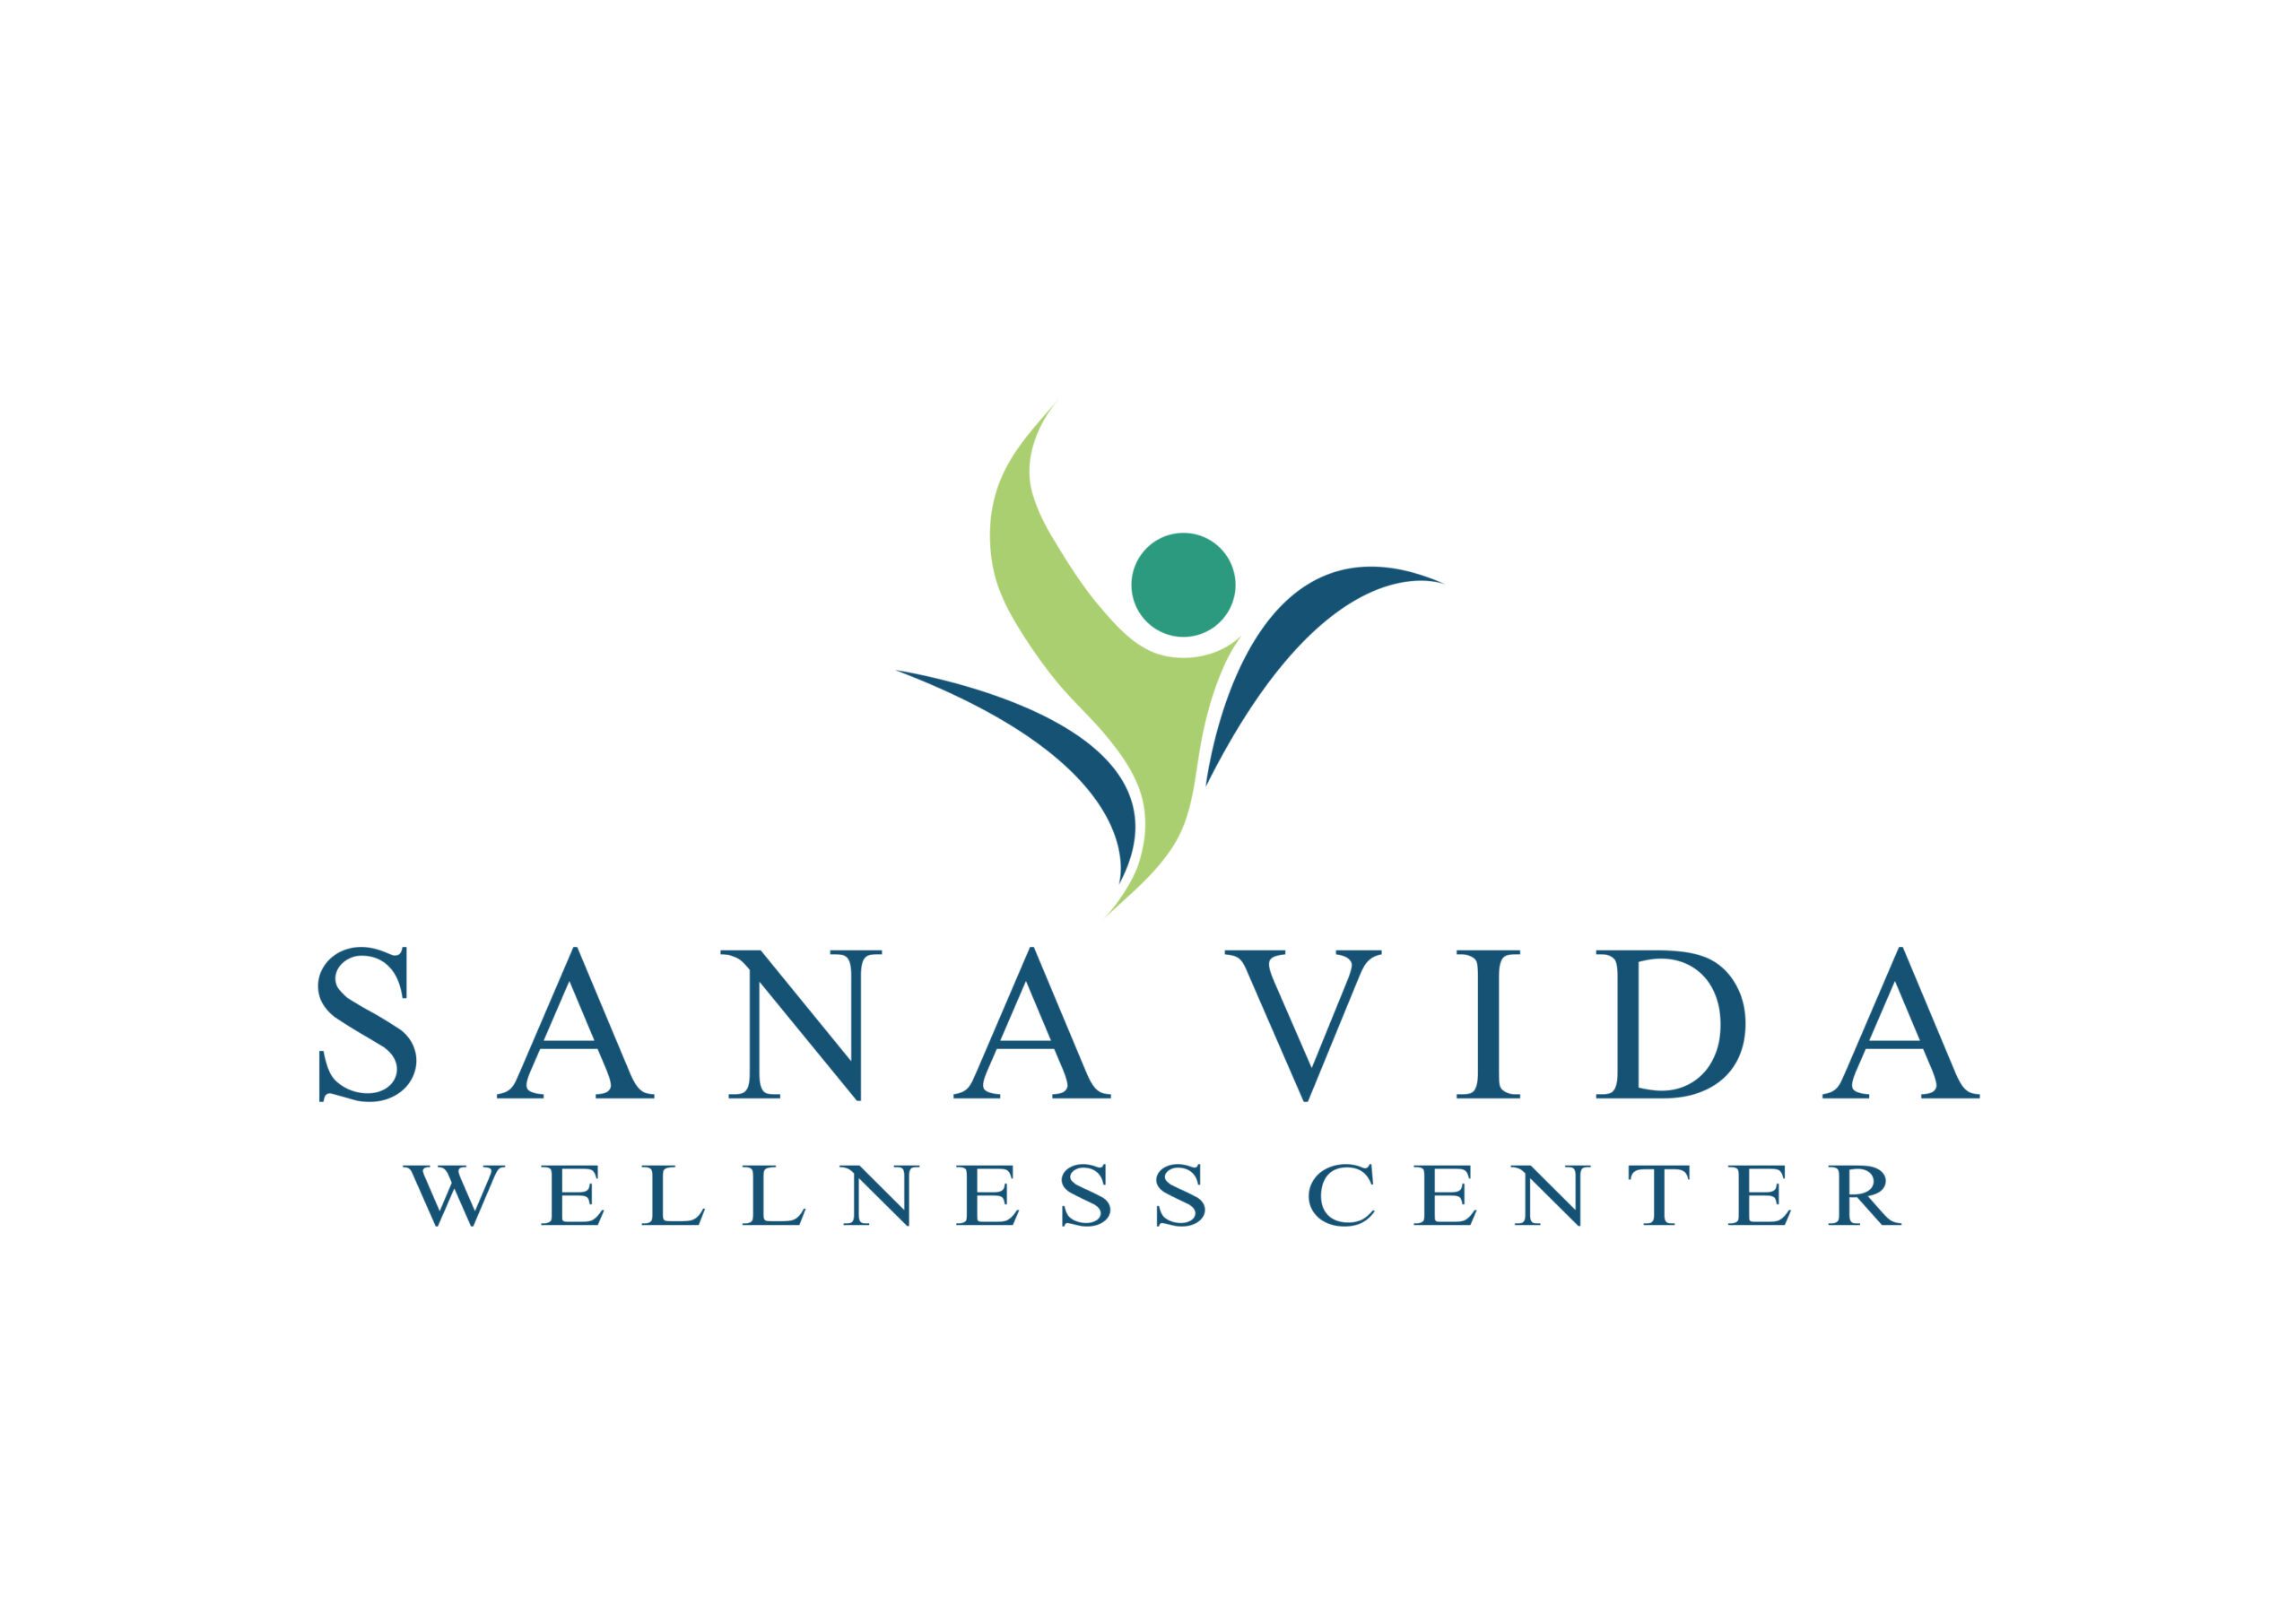 Sana Vida Wellness Center Vertical logo